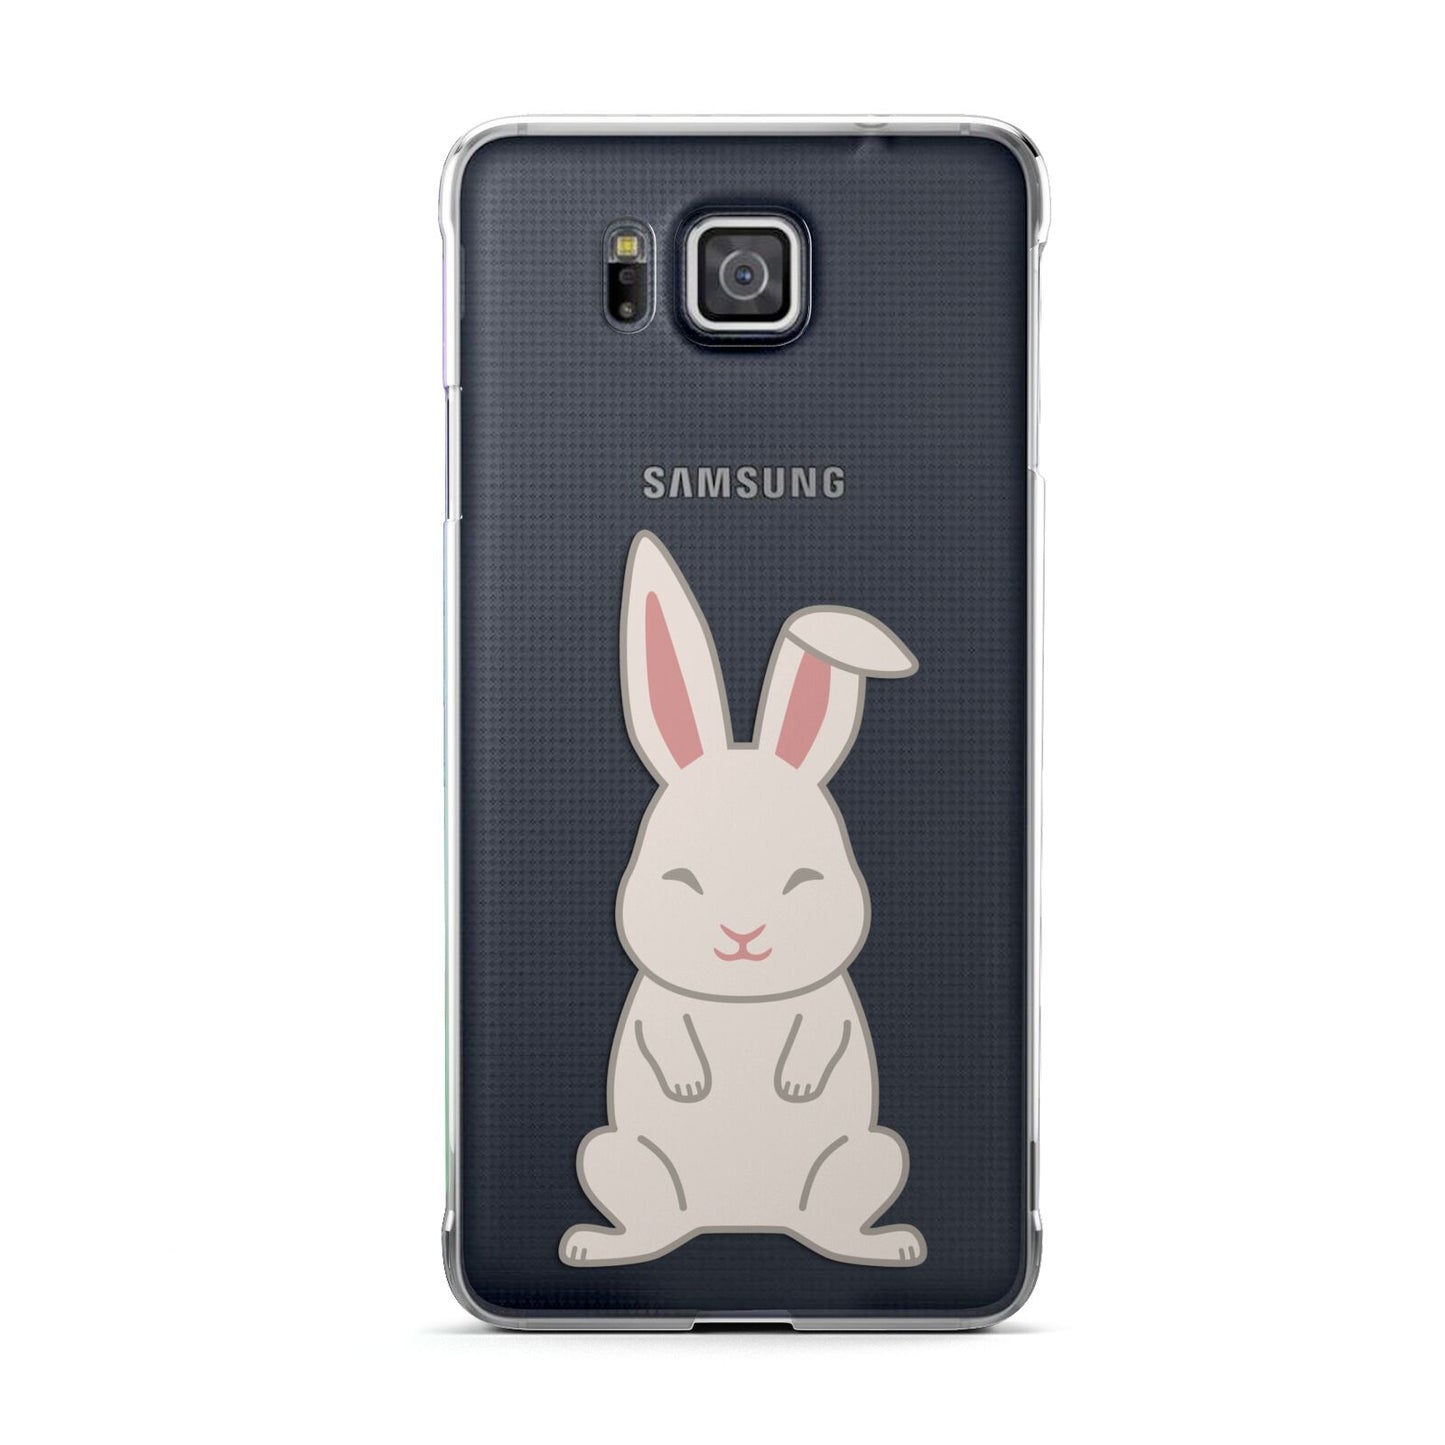 Bunny Samsung Galaxy Alpha Case